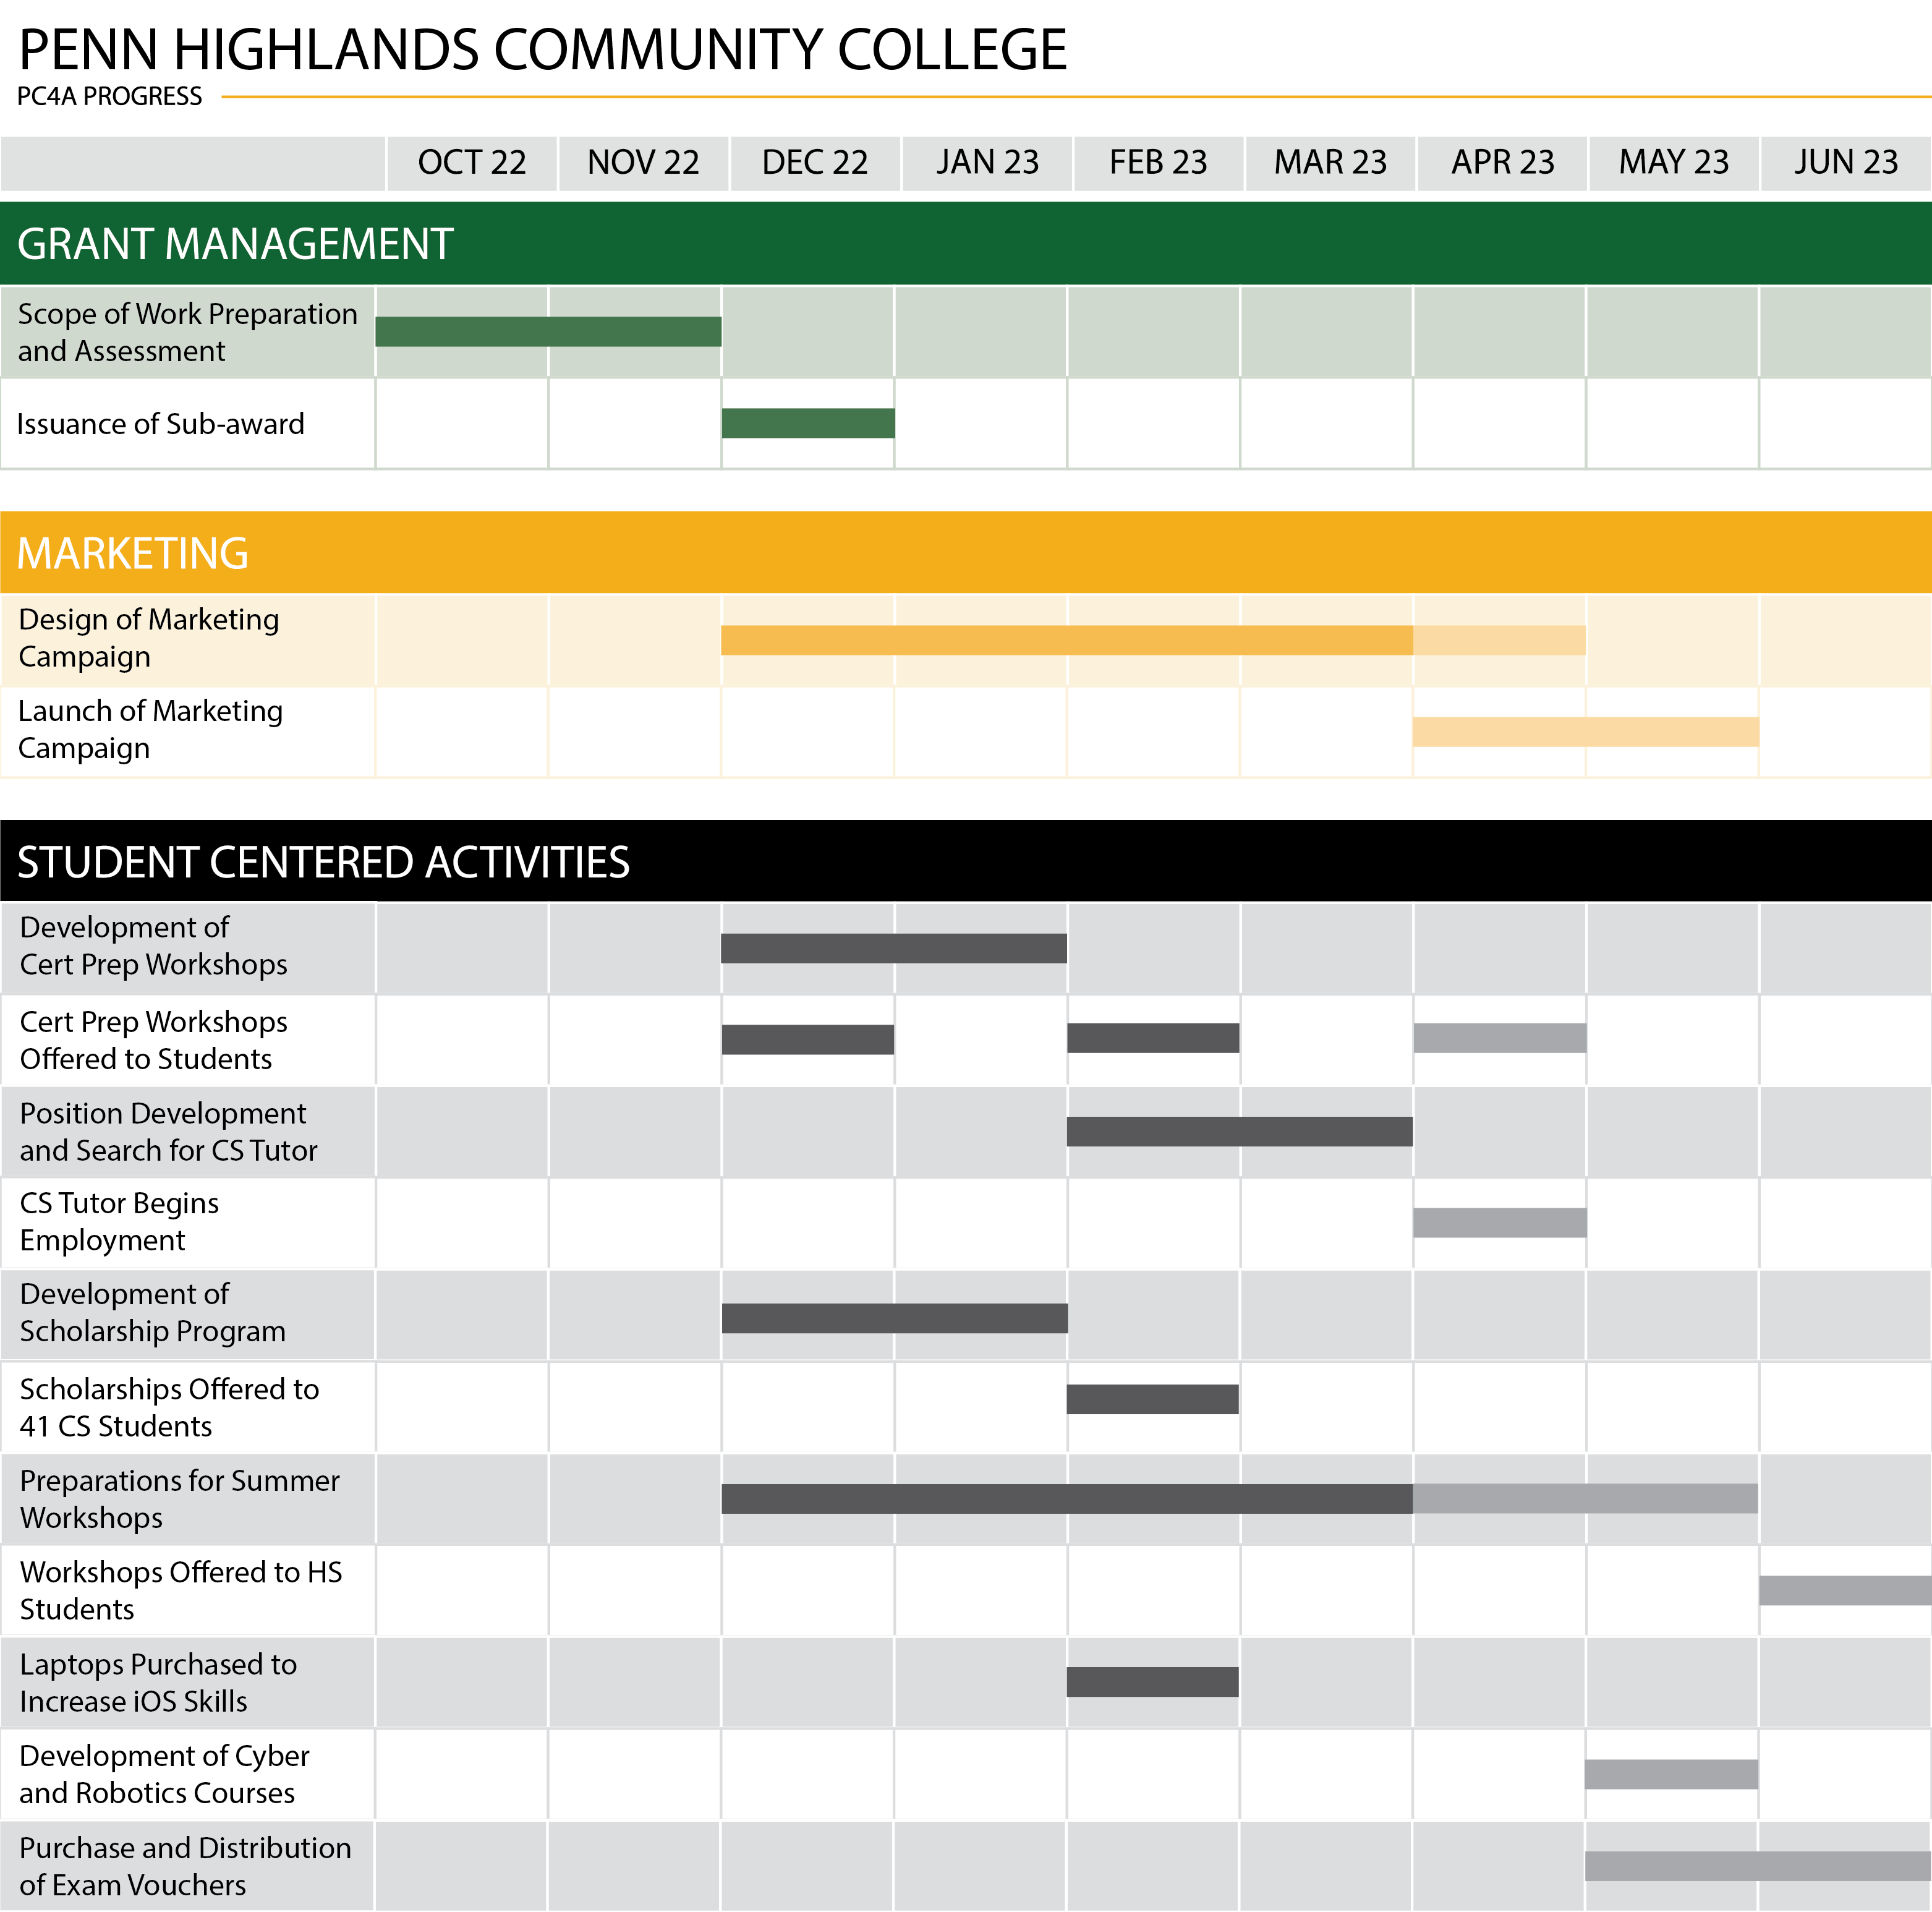 Chart showing PHCC PC4A progress